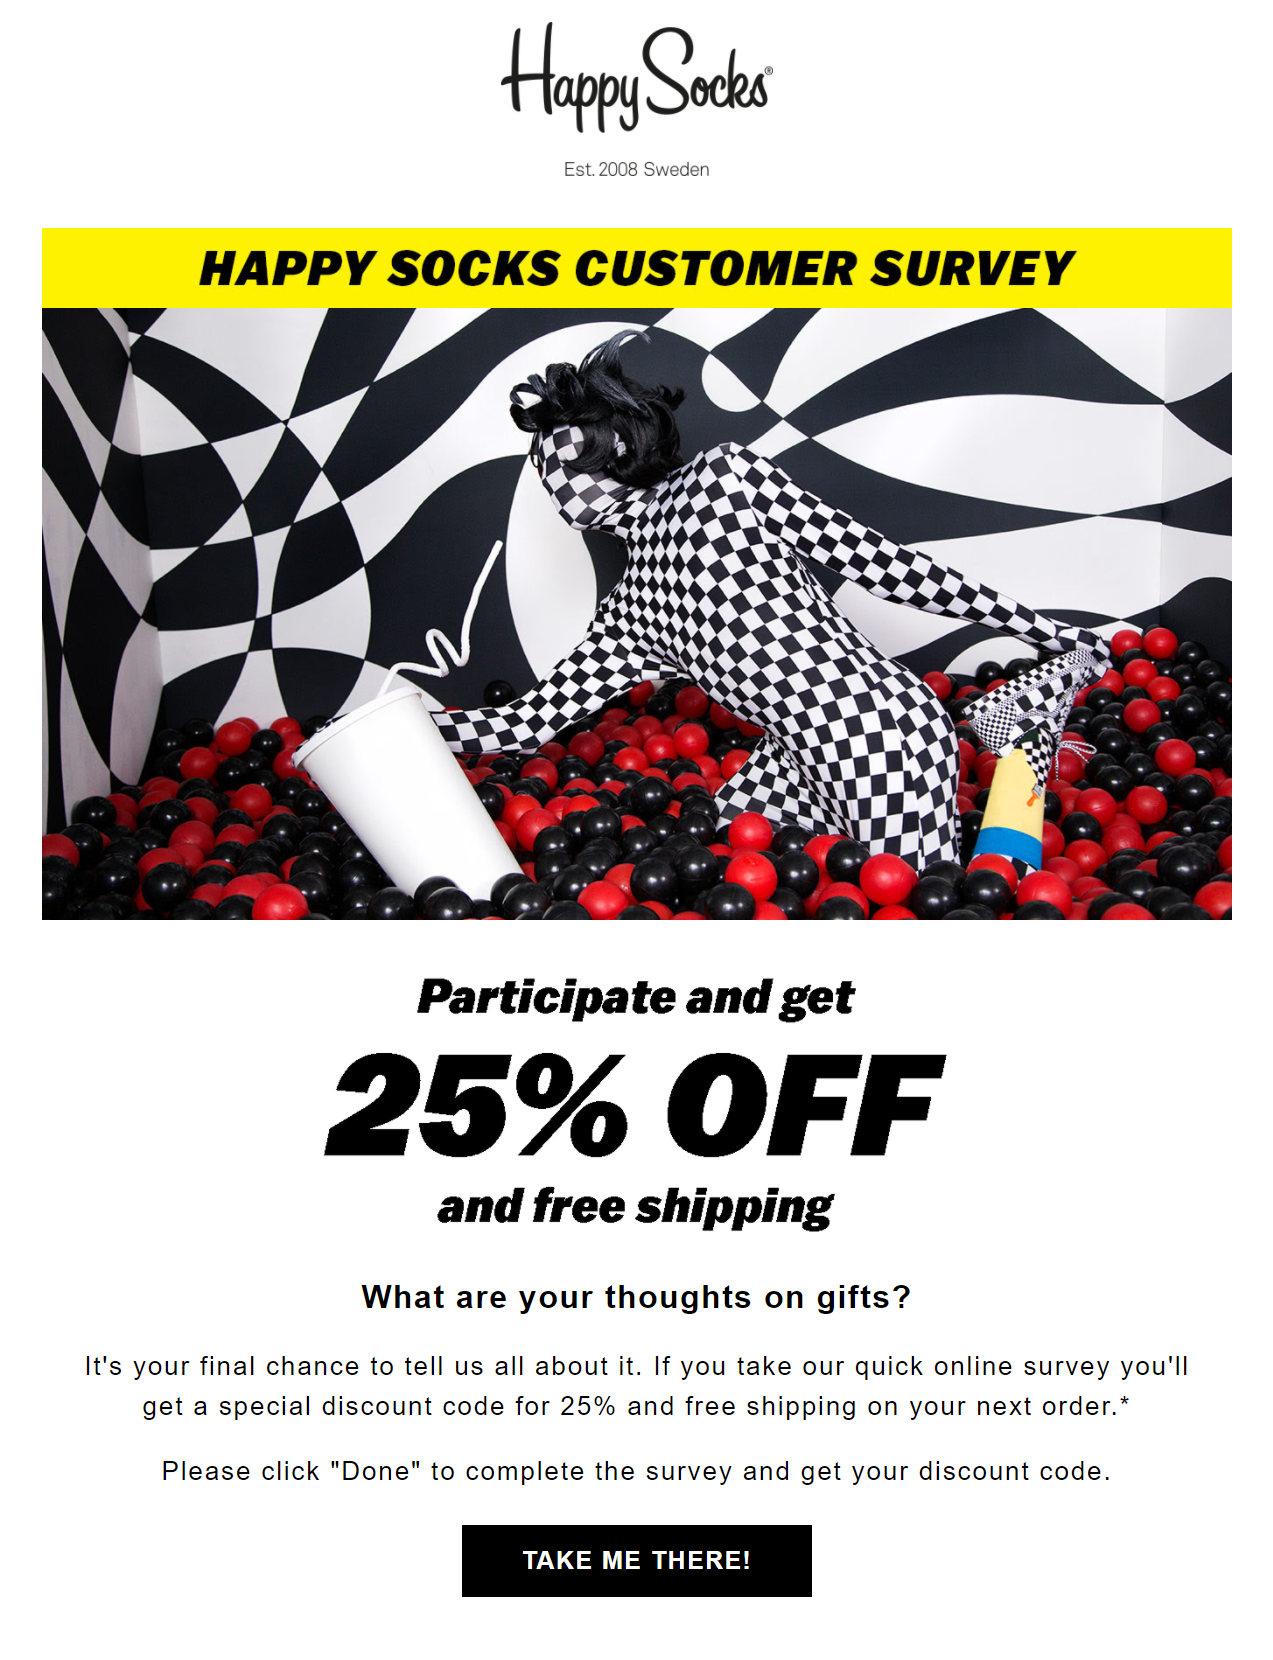 happysocks email marketing survey